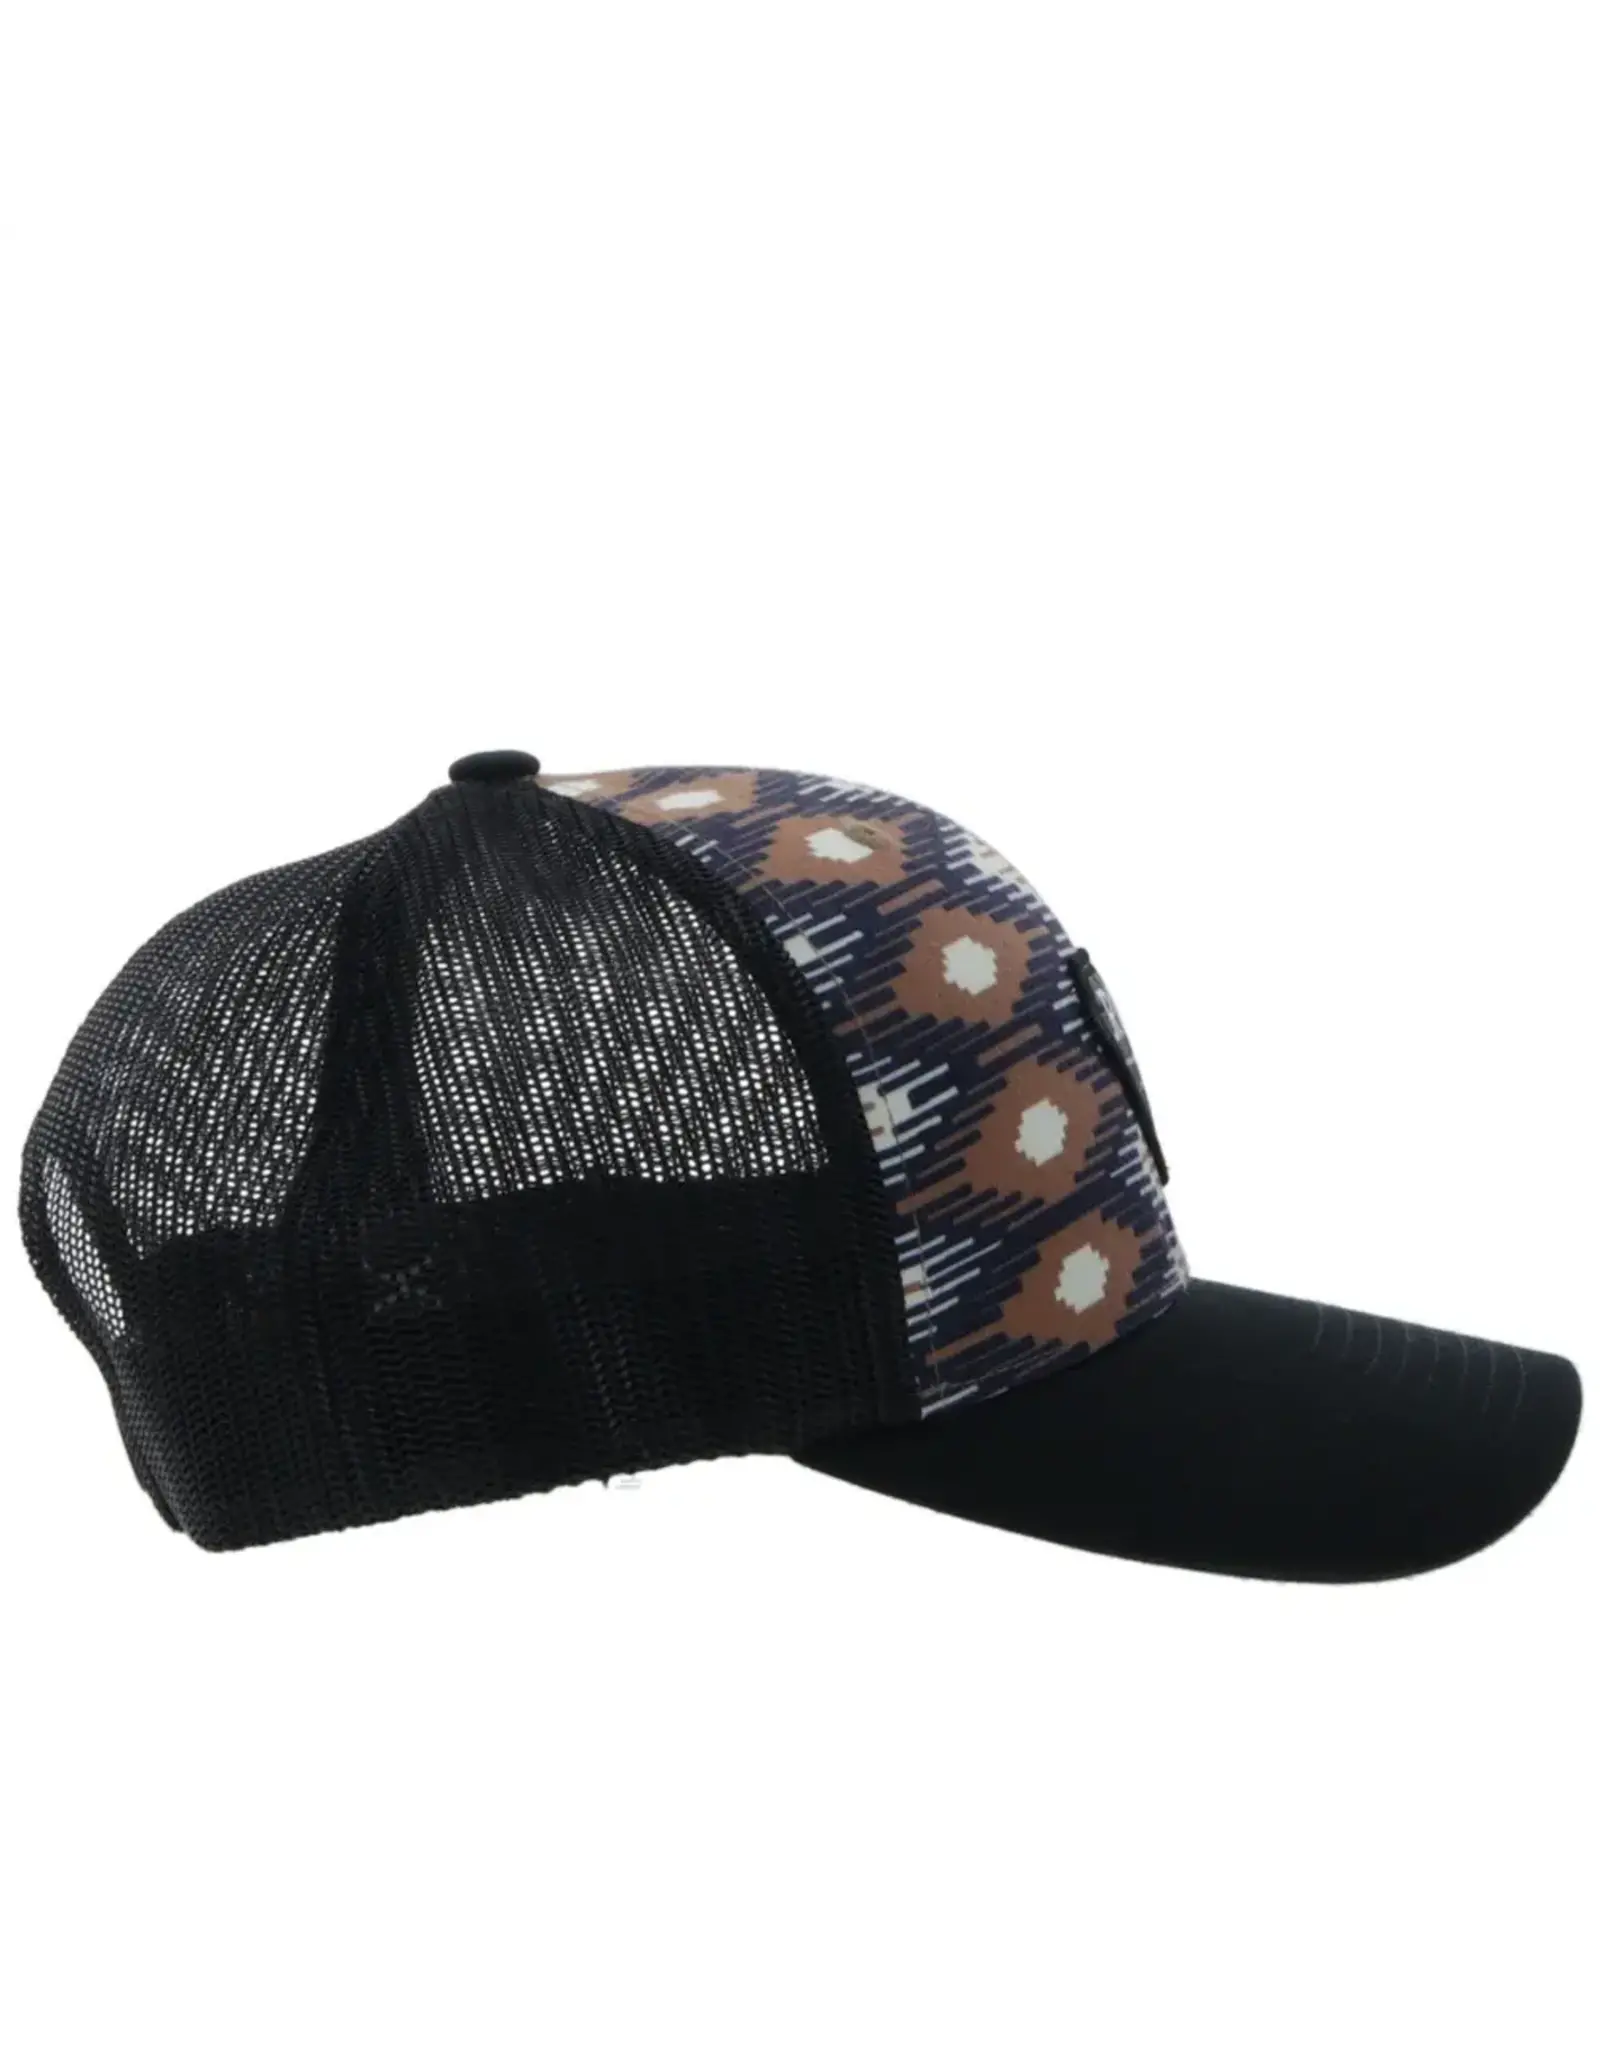 Hooey Brands Hat Rope Like A Girl Cream/Tan/Black Aztec Pattern Hat